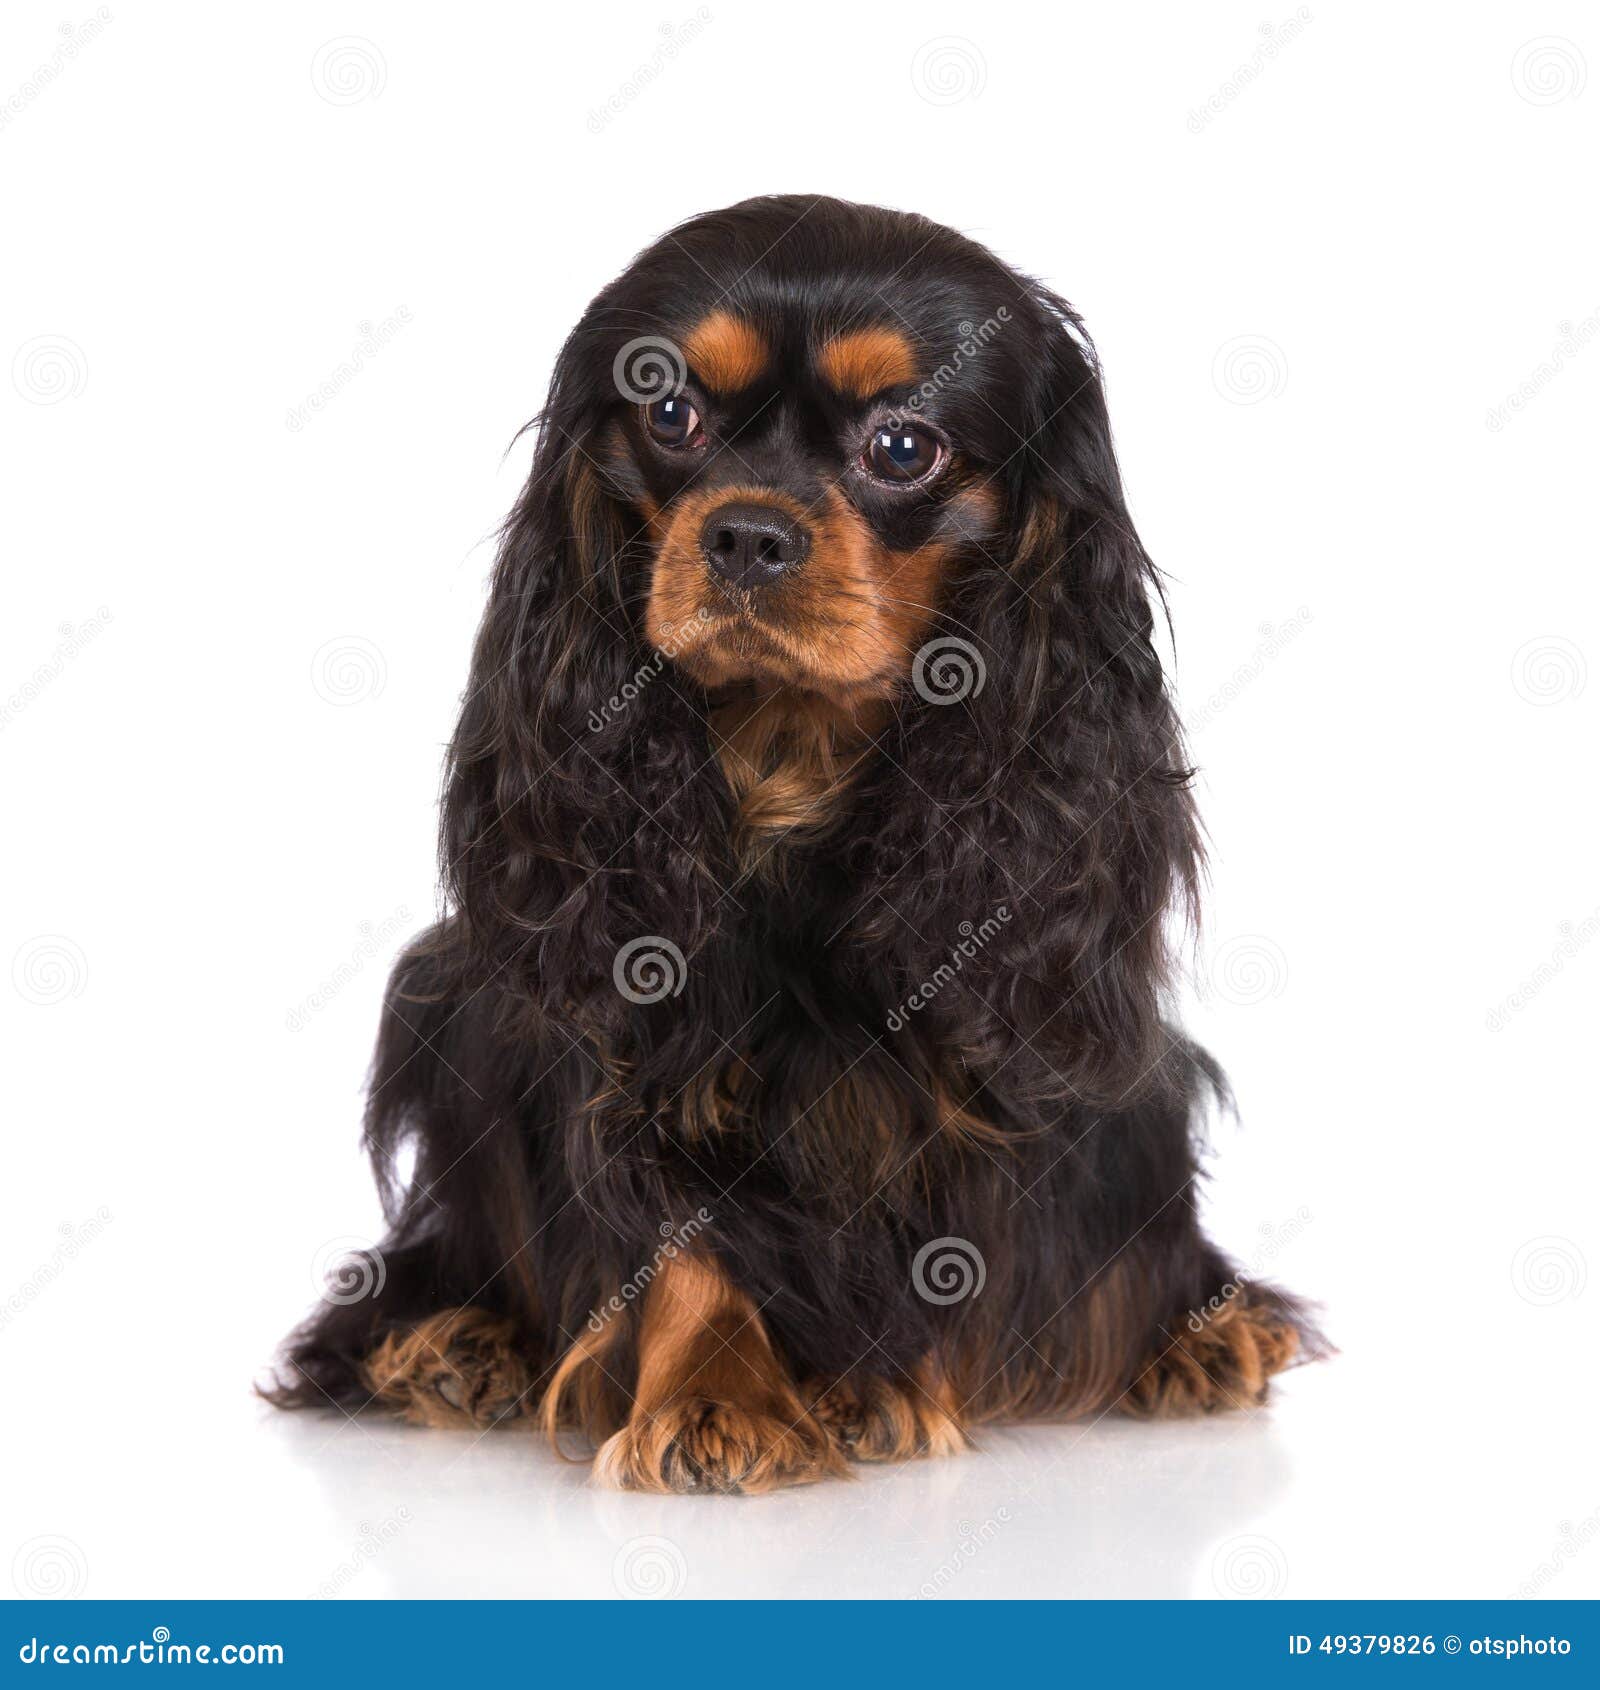 Adorable Black And Tan Cavalier King Charles Spaniel Dog Stock Photo Image Of Adorable King 49379826